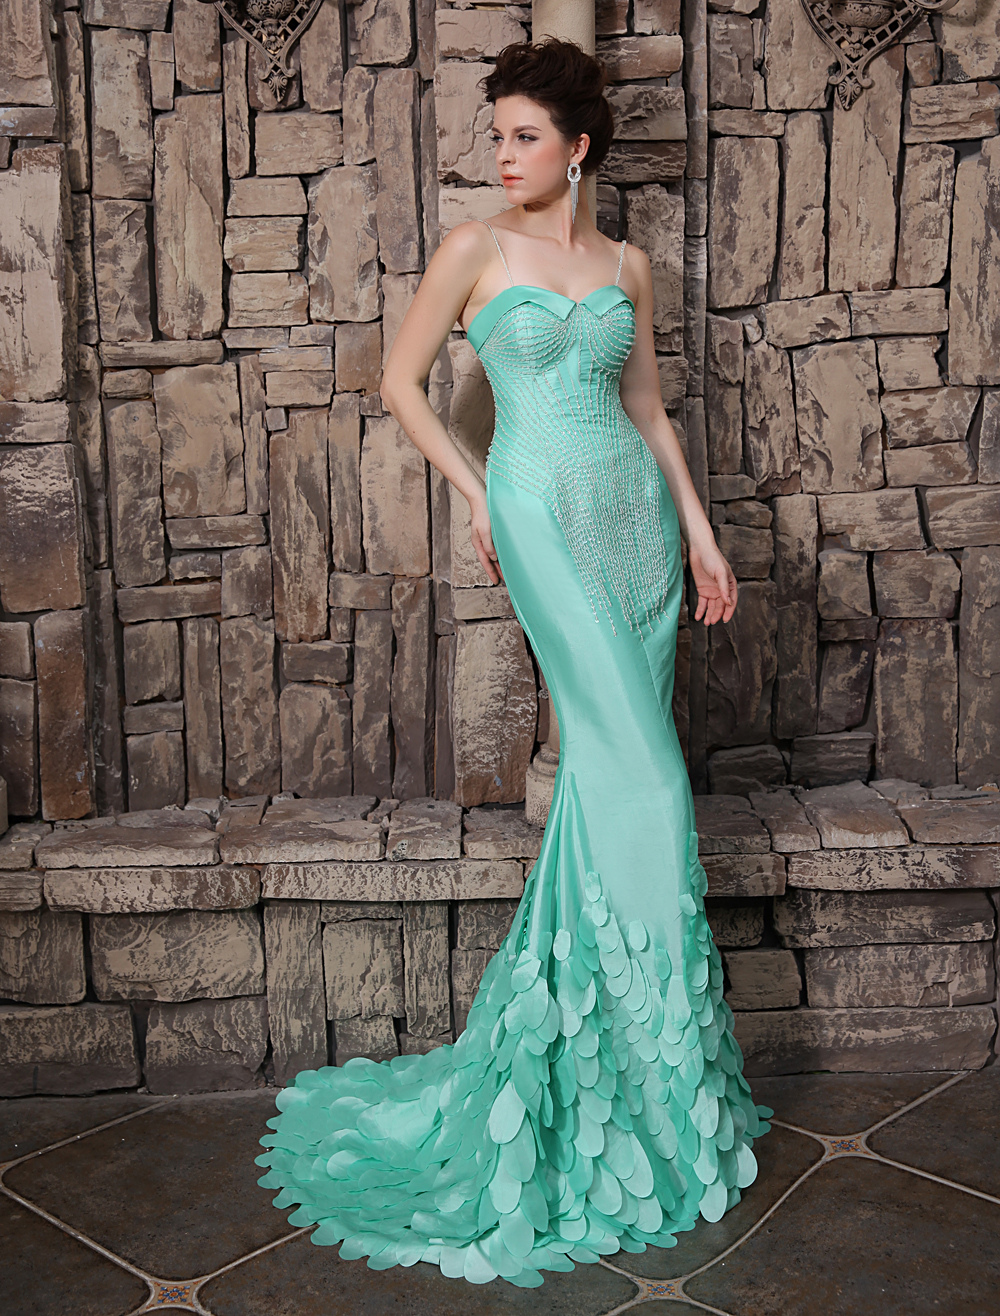 Mermaid Green Neck Sweep Evening Dress Milanoo (Wedding Evening Dresses) photo